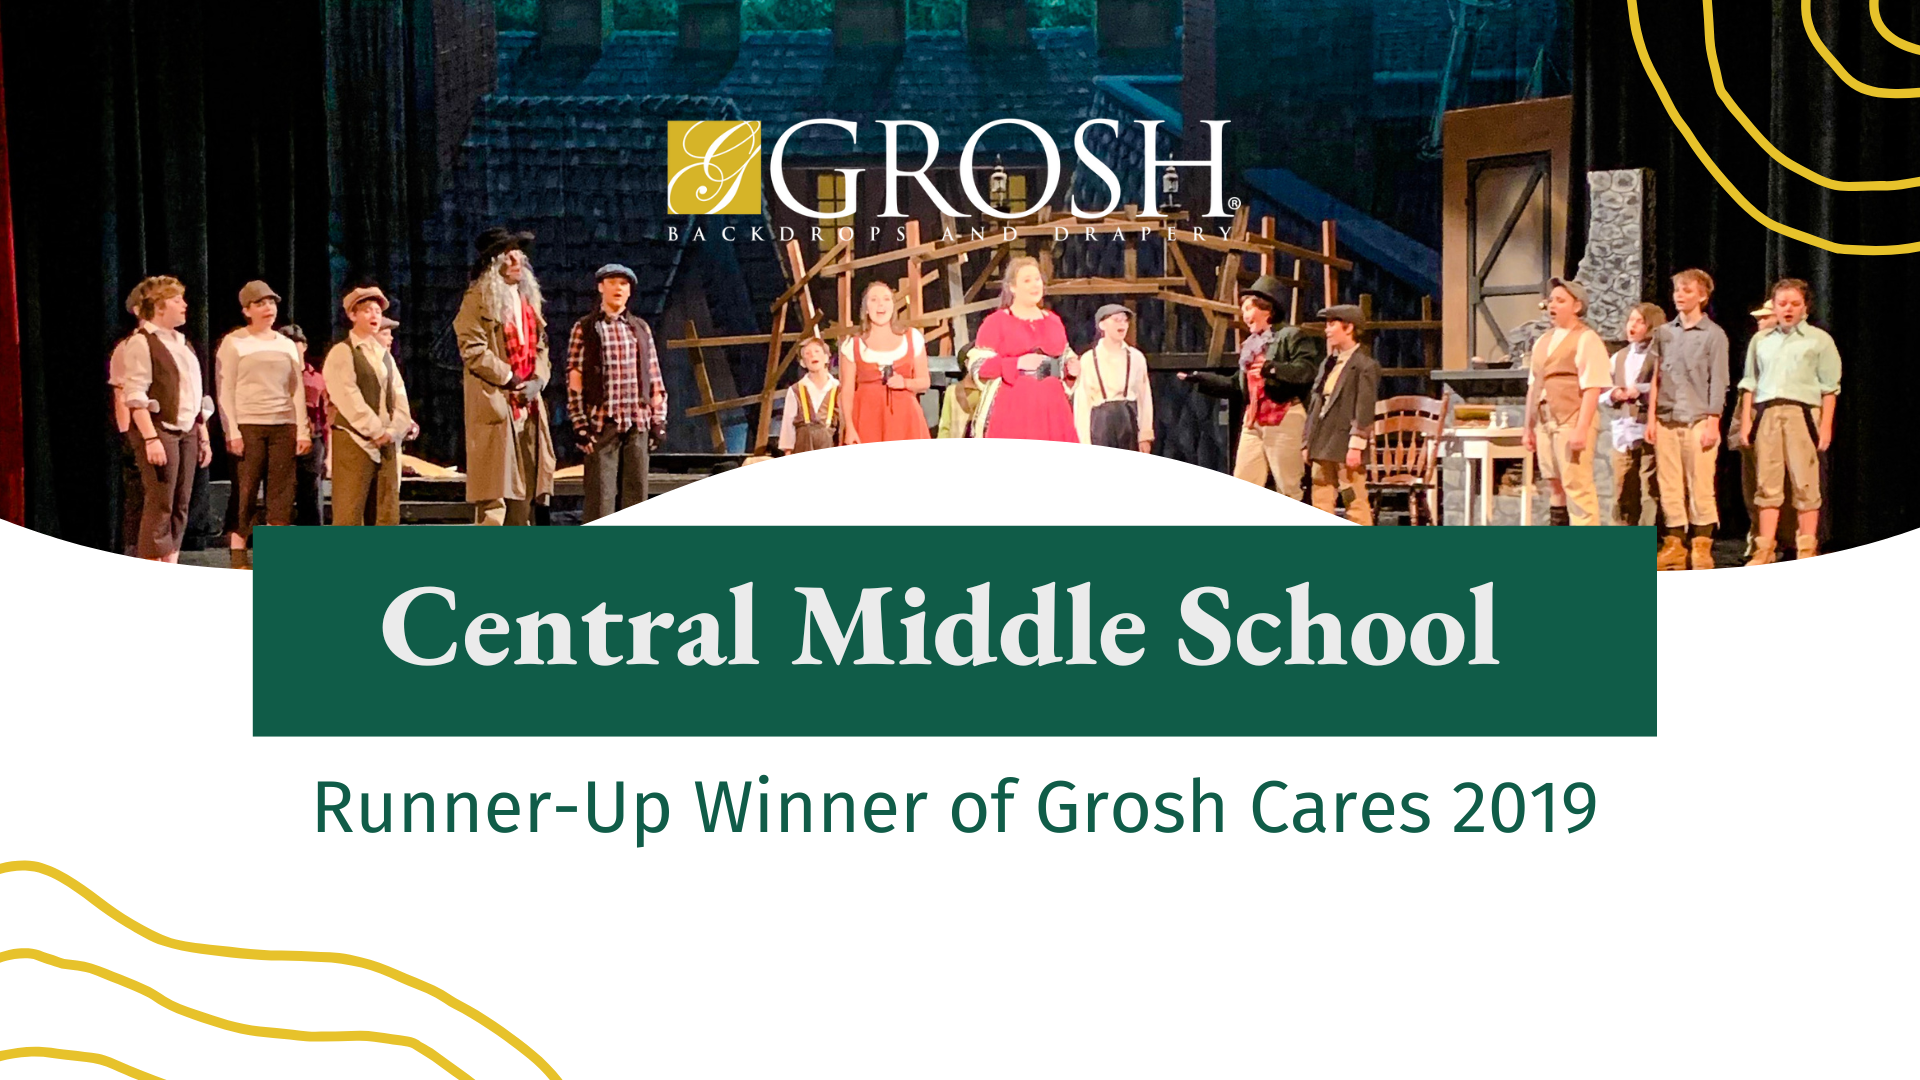 Central Middle School – Runner Up Winner of Grosh Cares 2019